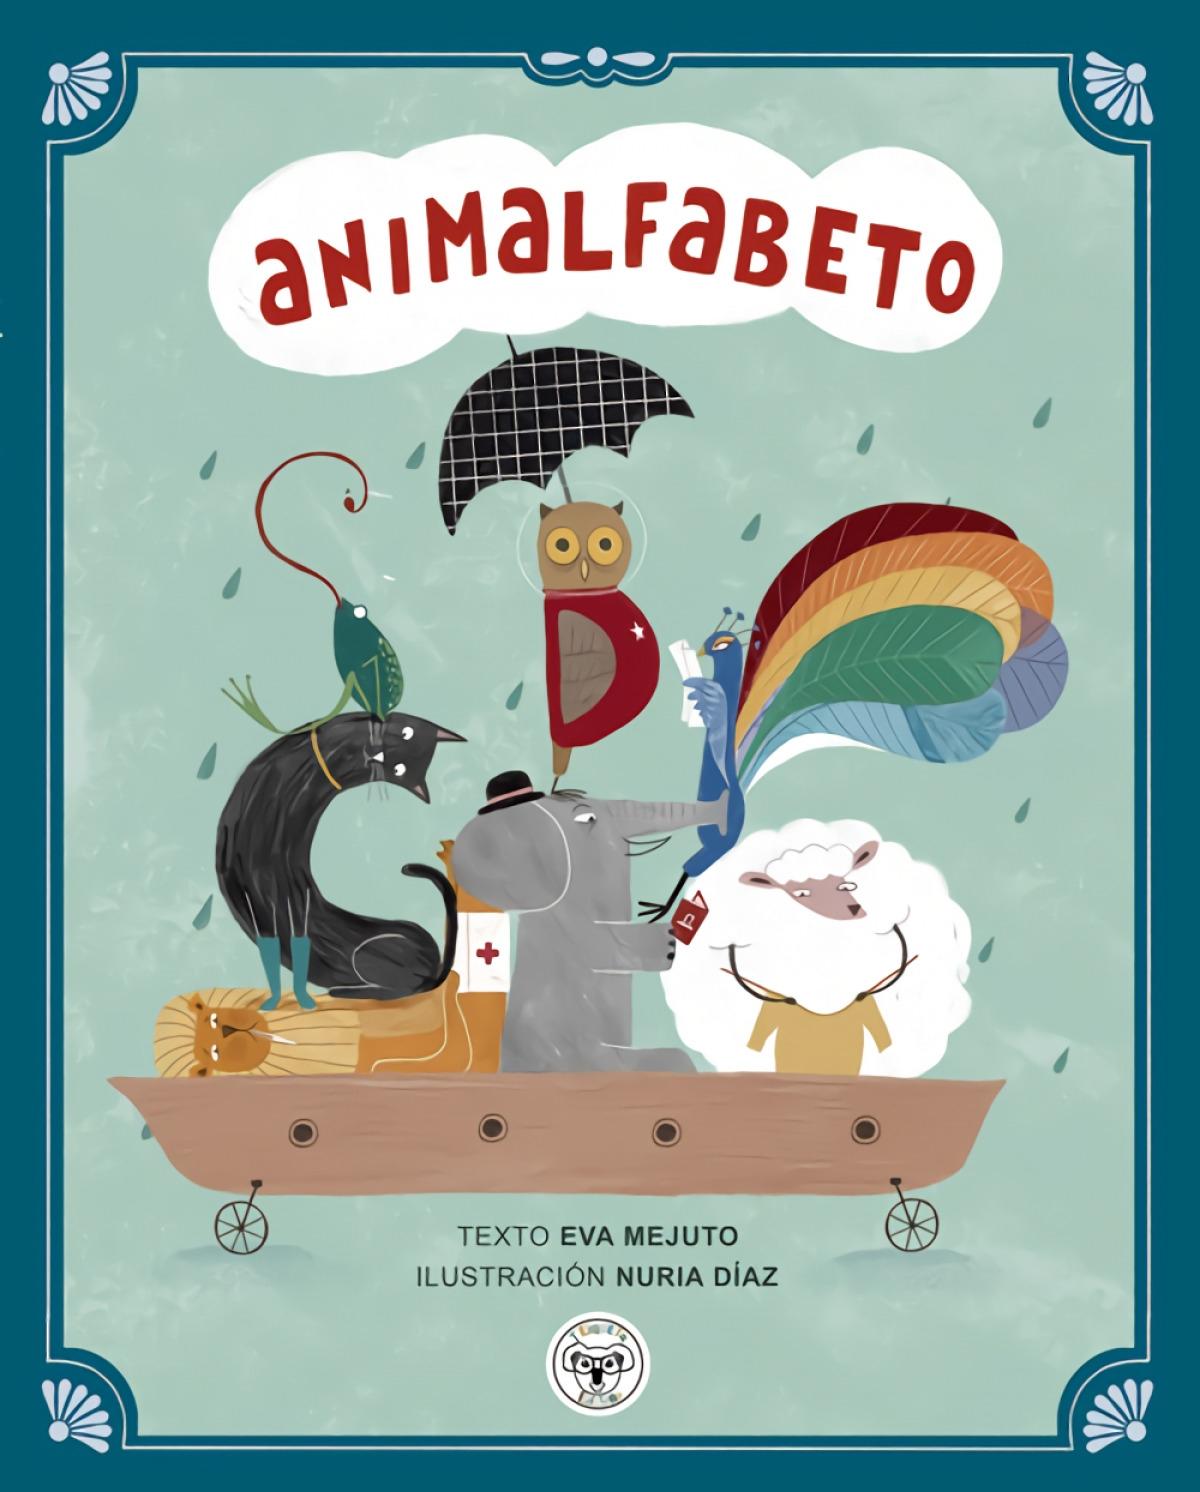 Animalfabeto  "Alfabeto poético"